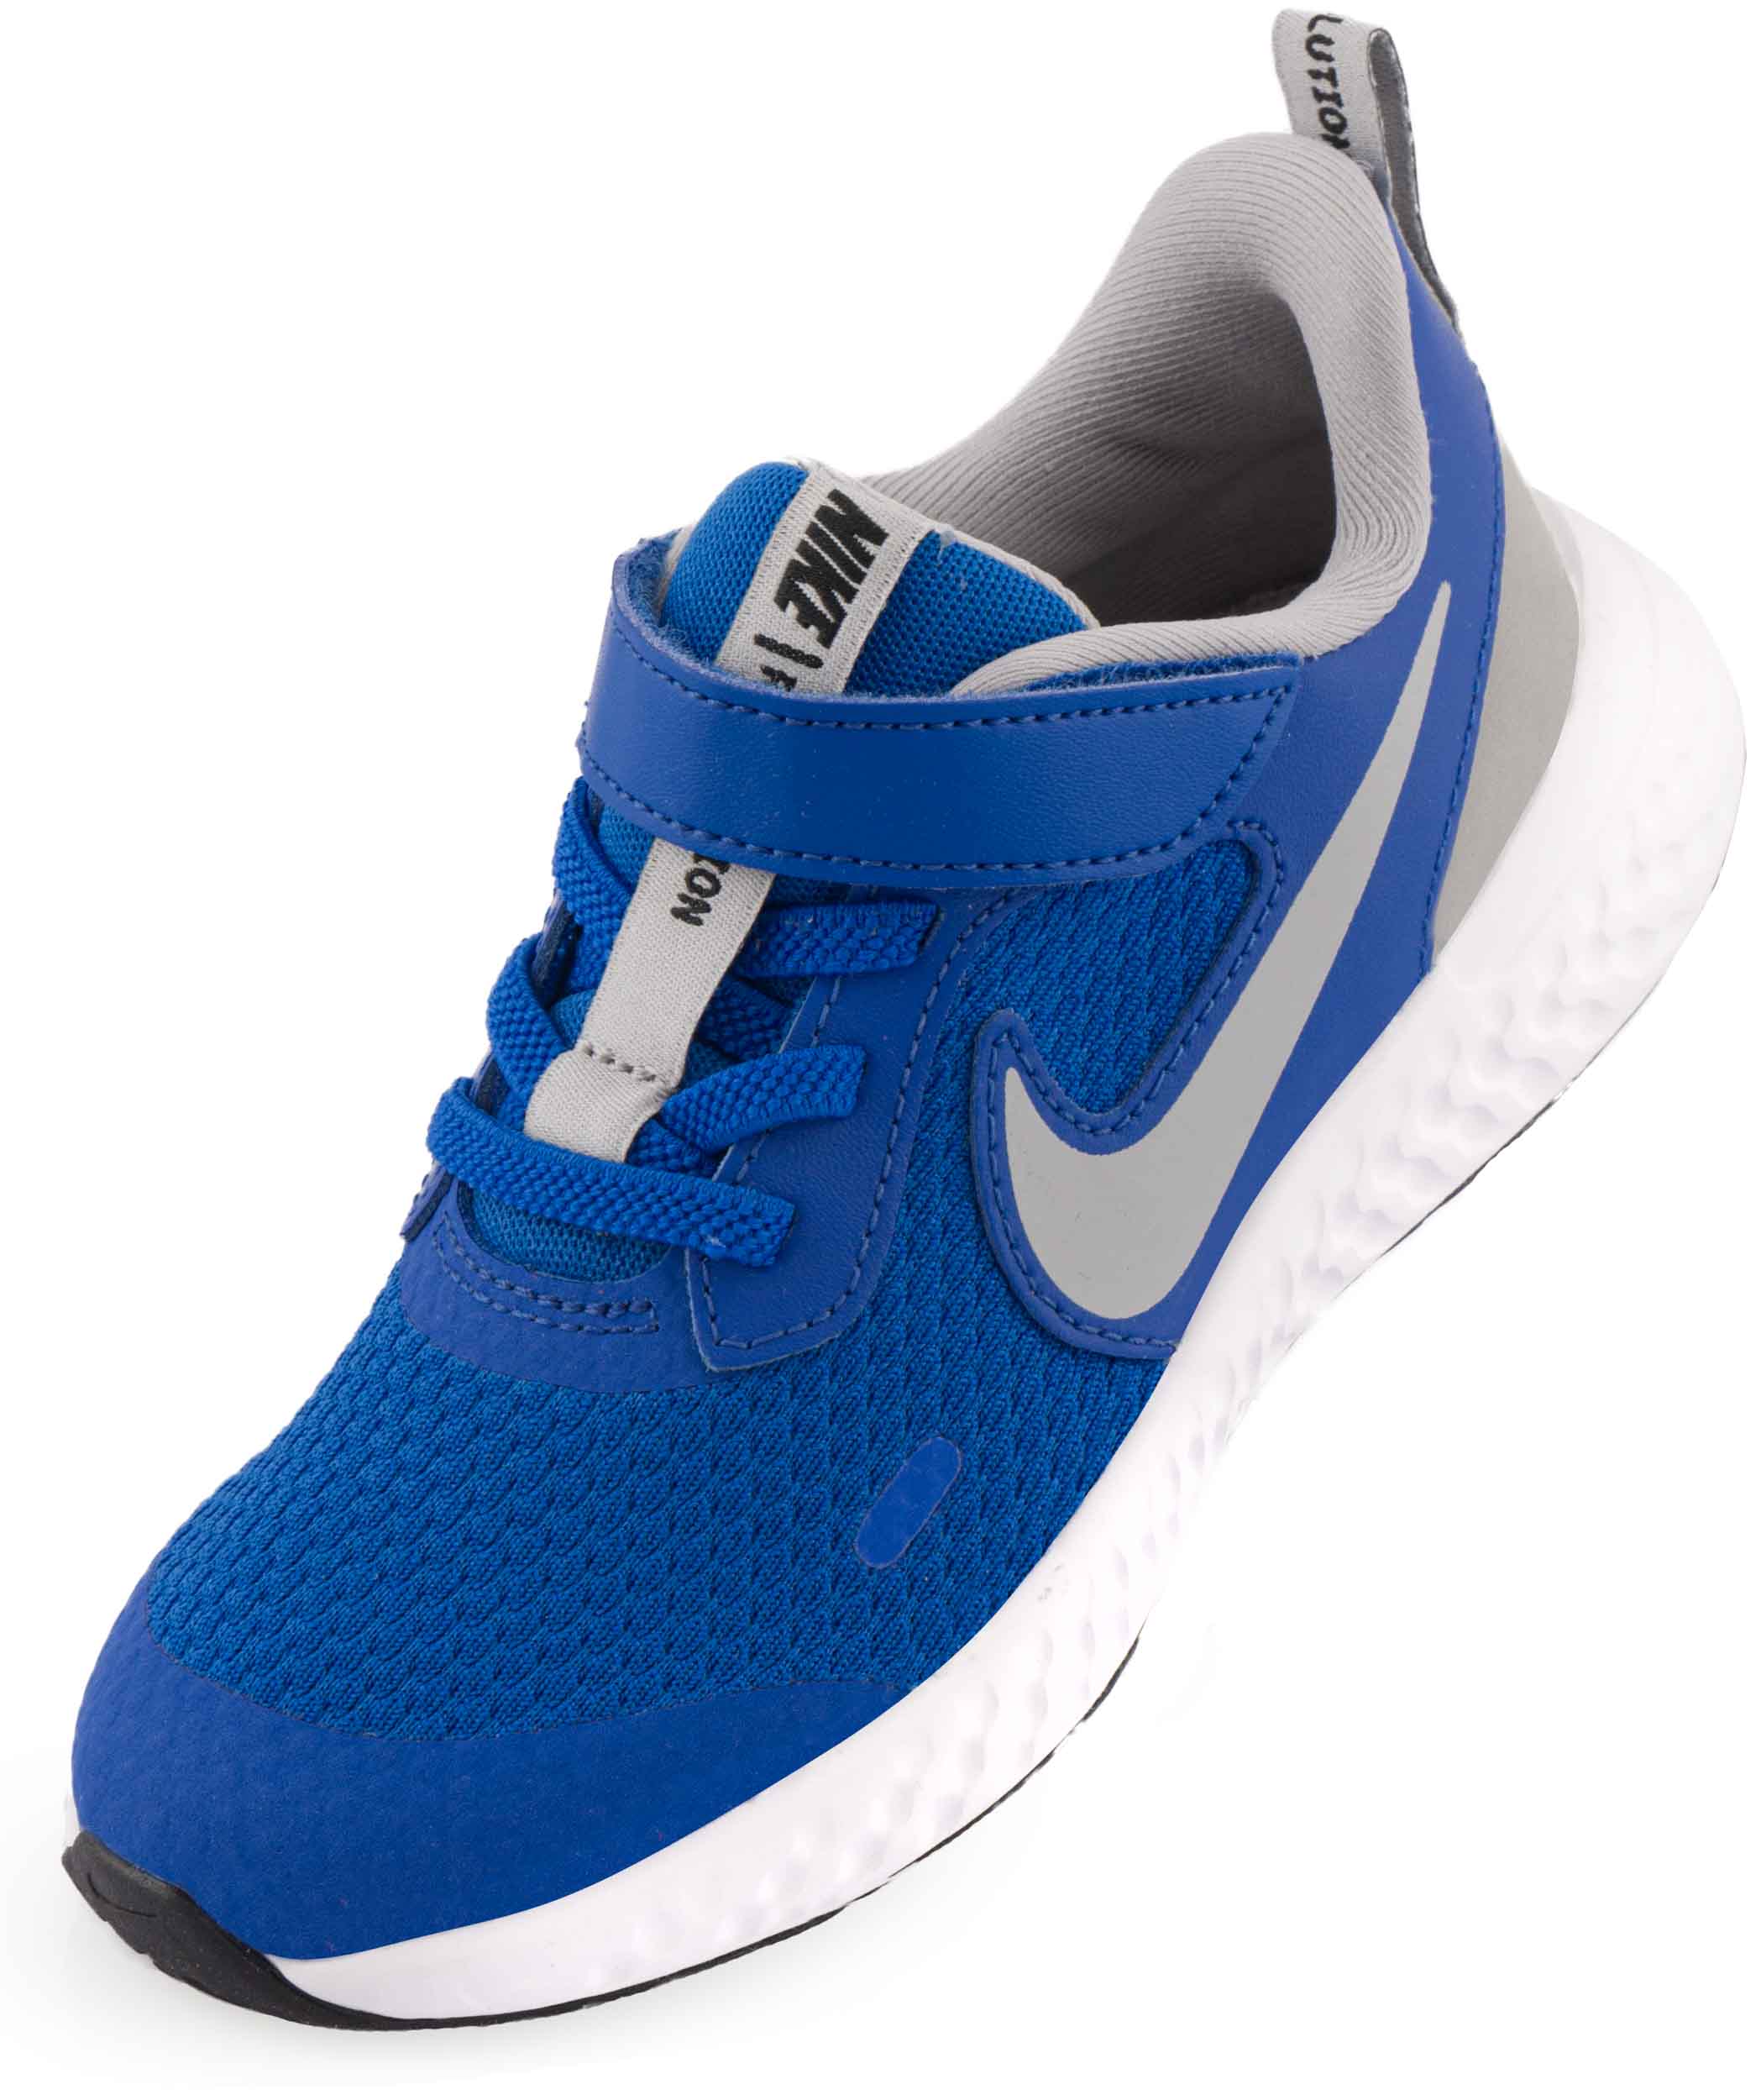 Dětská obuv Nike Jr Revolution 5 Royal Blue/Grey/White|28